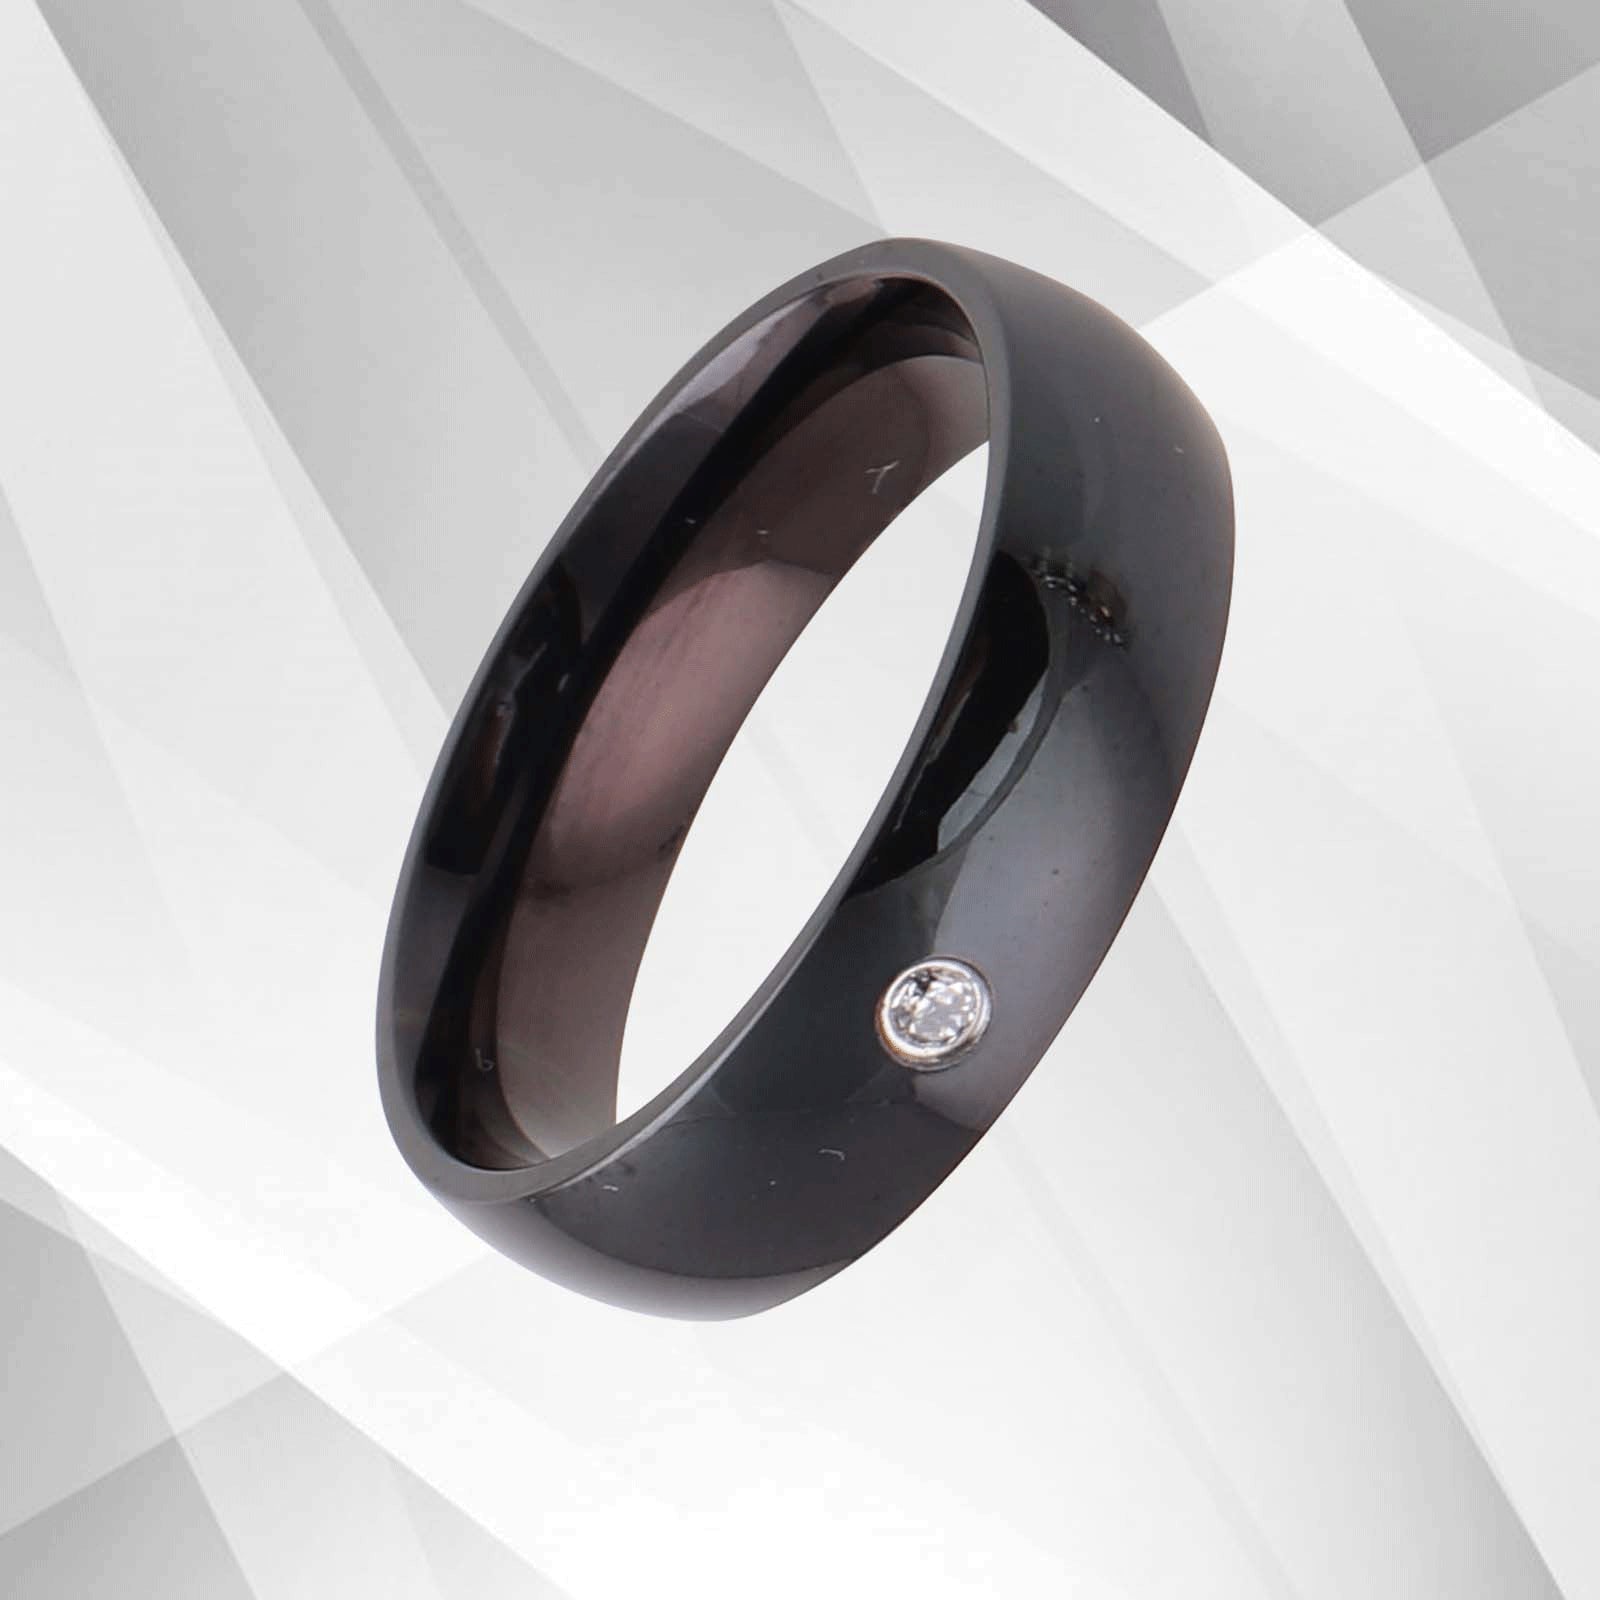 Dazzling Designer Black Titanium CZ Diamond Wedding Band Ring - 6mm Wide, Comfort Fit, Women's Gift Bijou Her